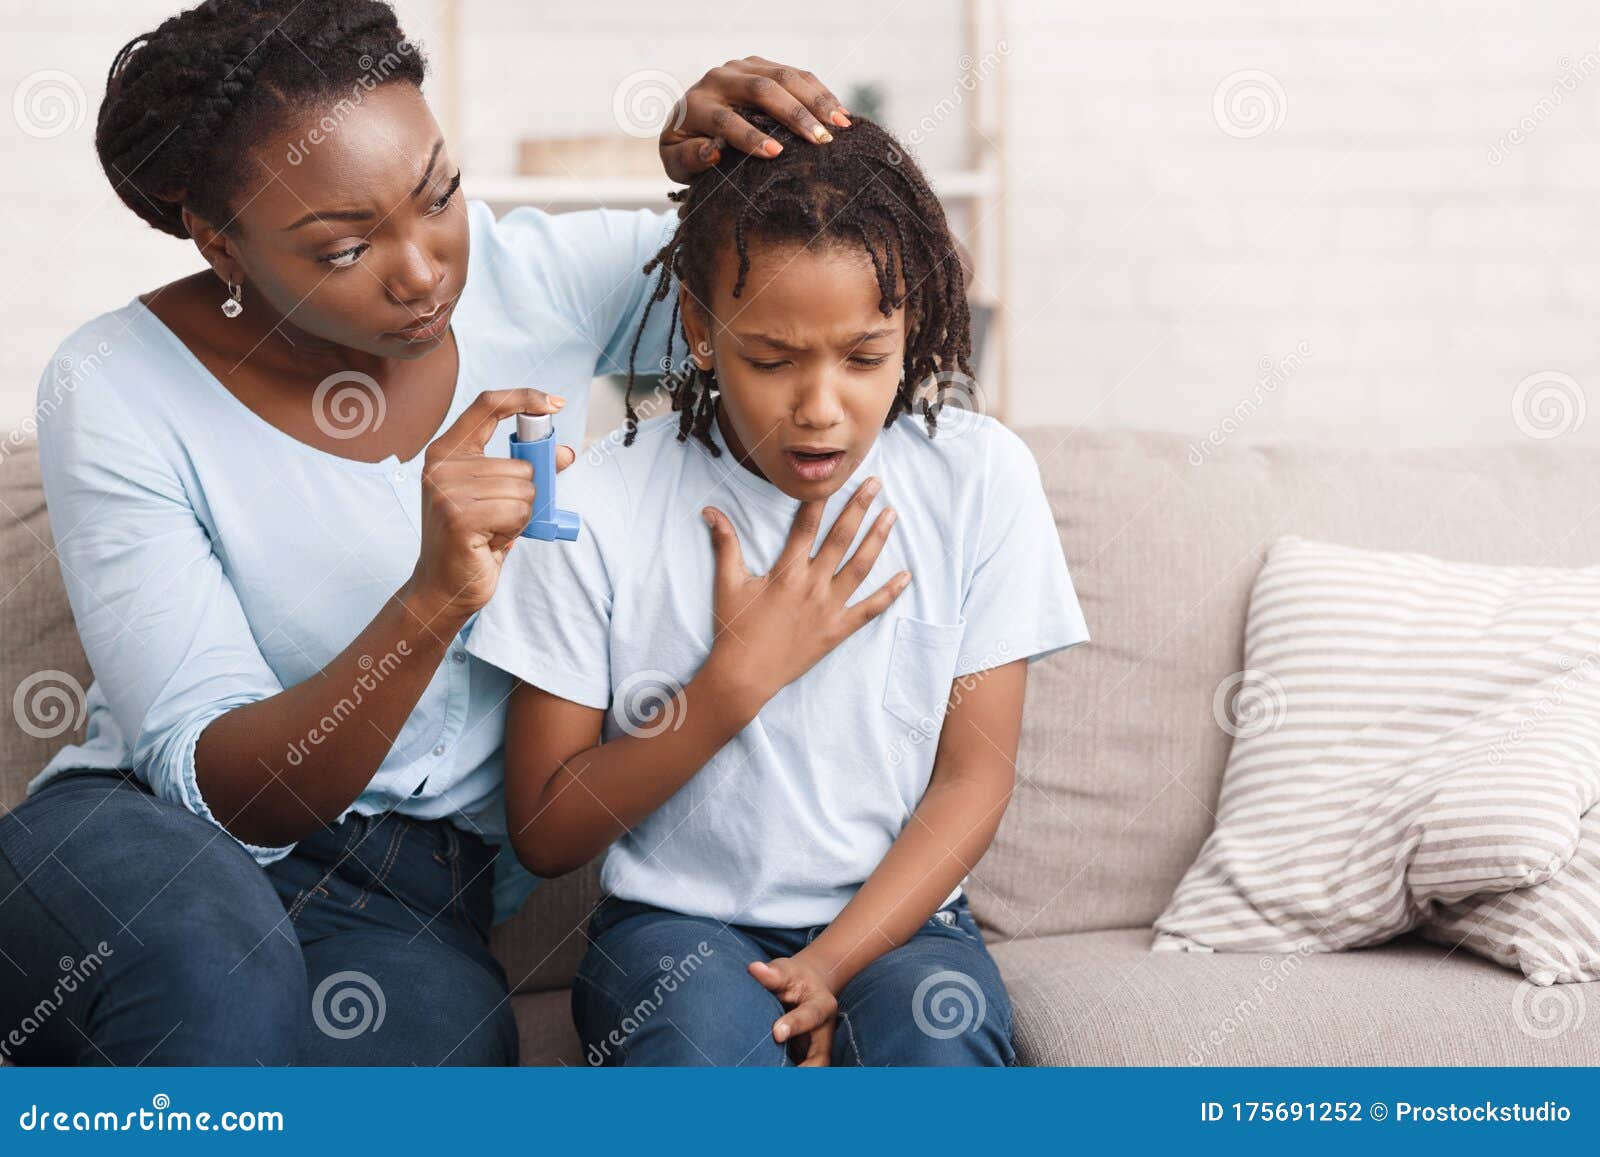 afro mother holding asthma inhaler for daughter